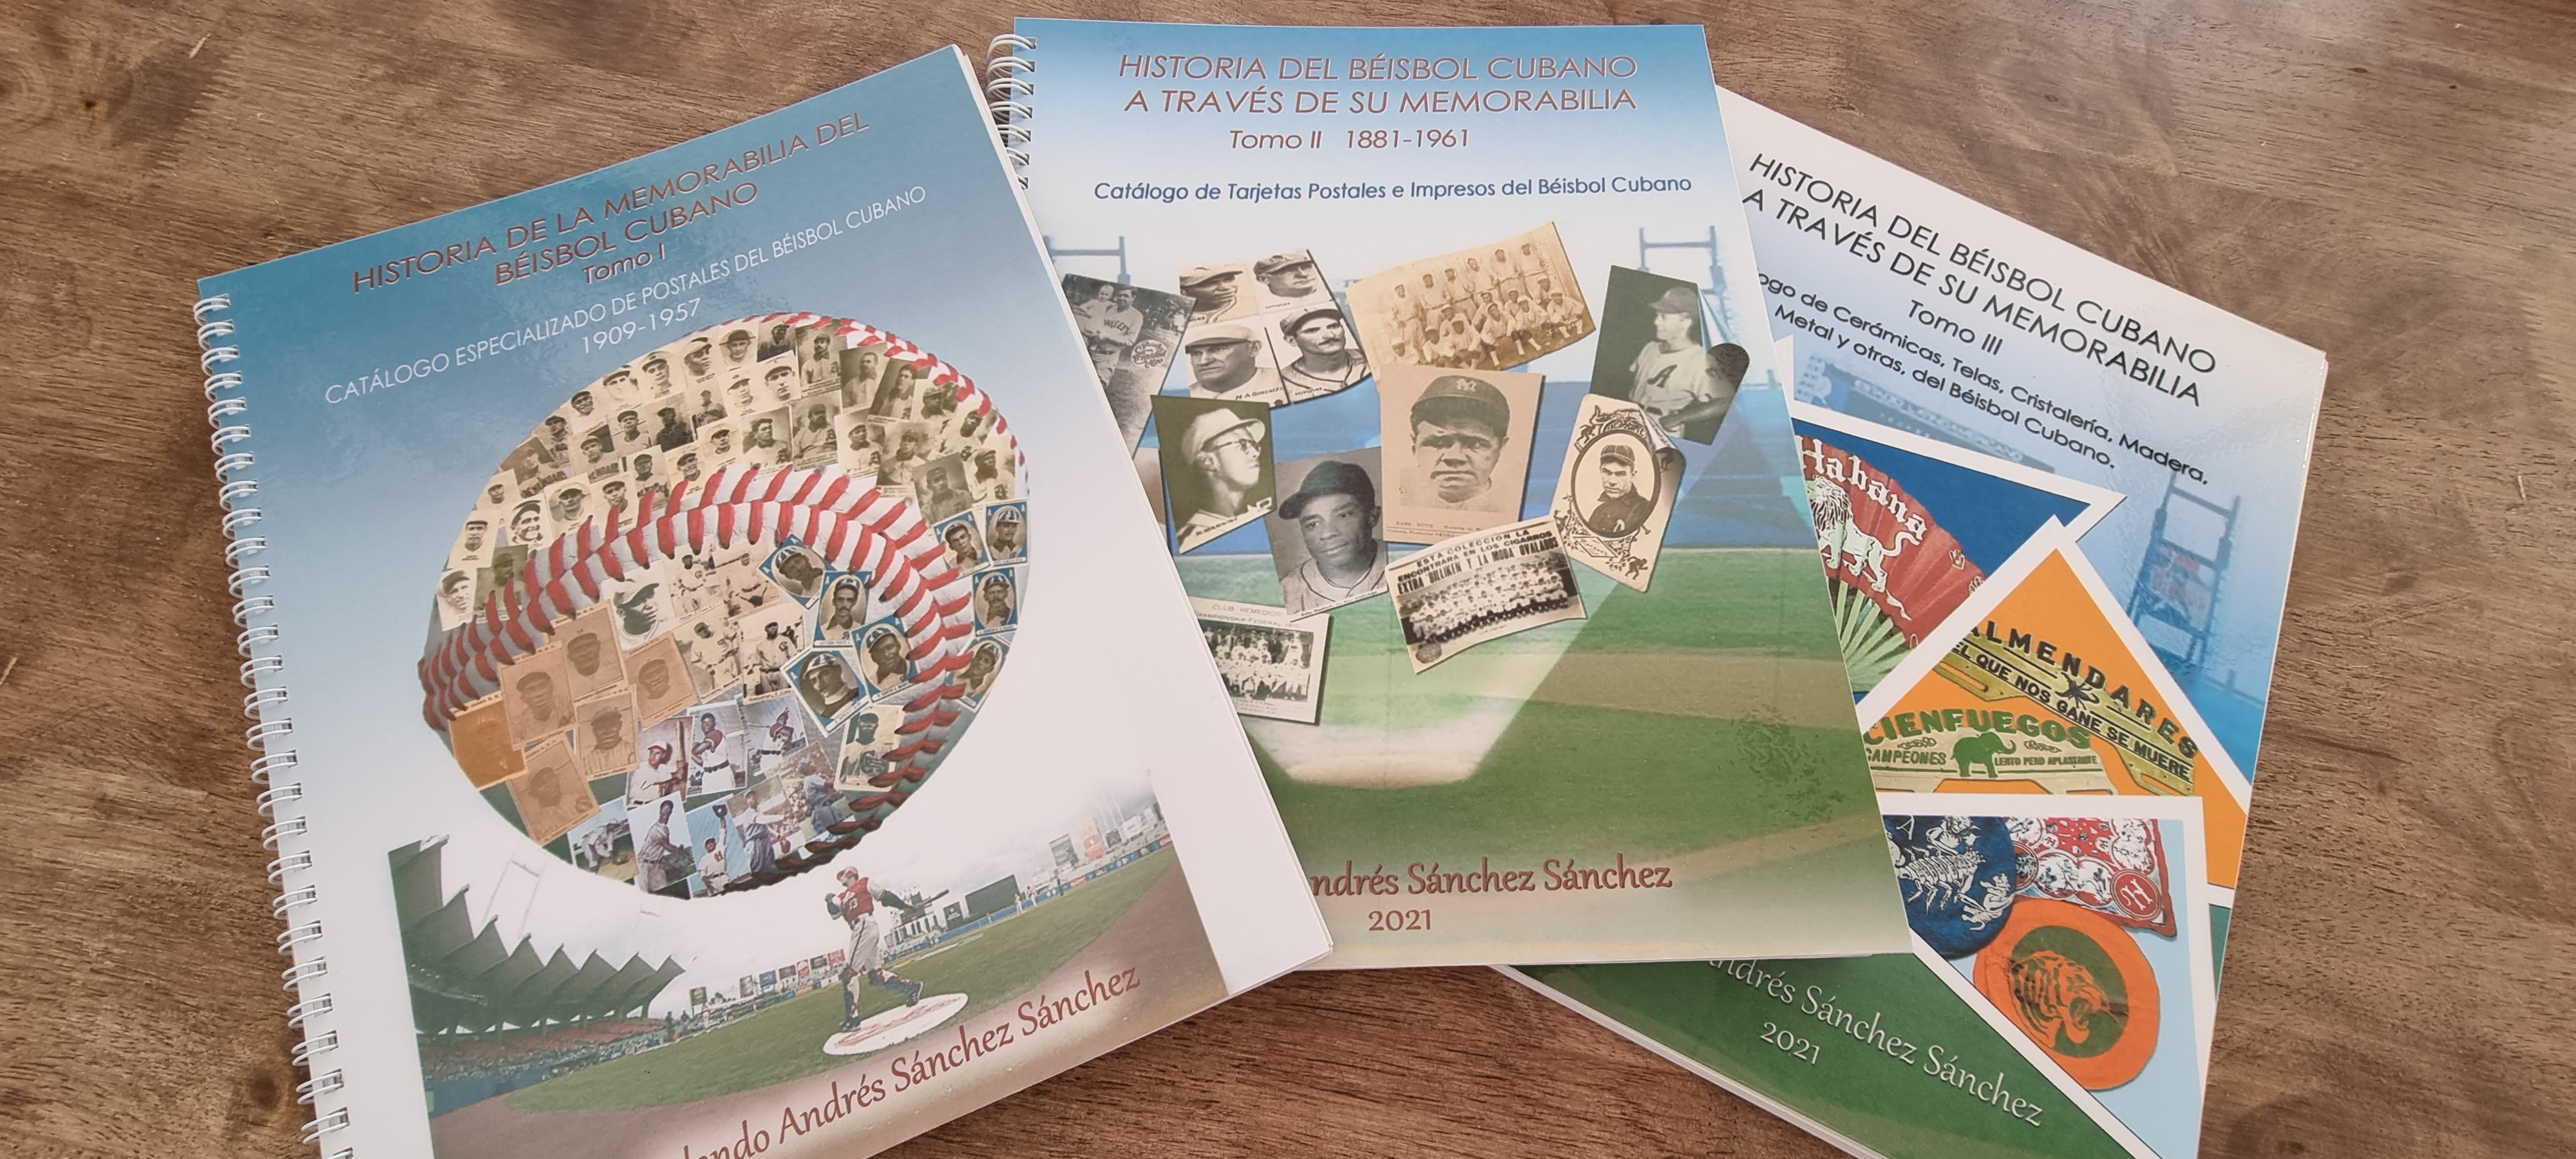 Rolando Sanchez develops his own books that examine the history of baseball memorabilia in Cuba